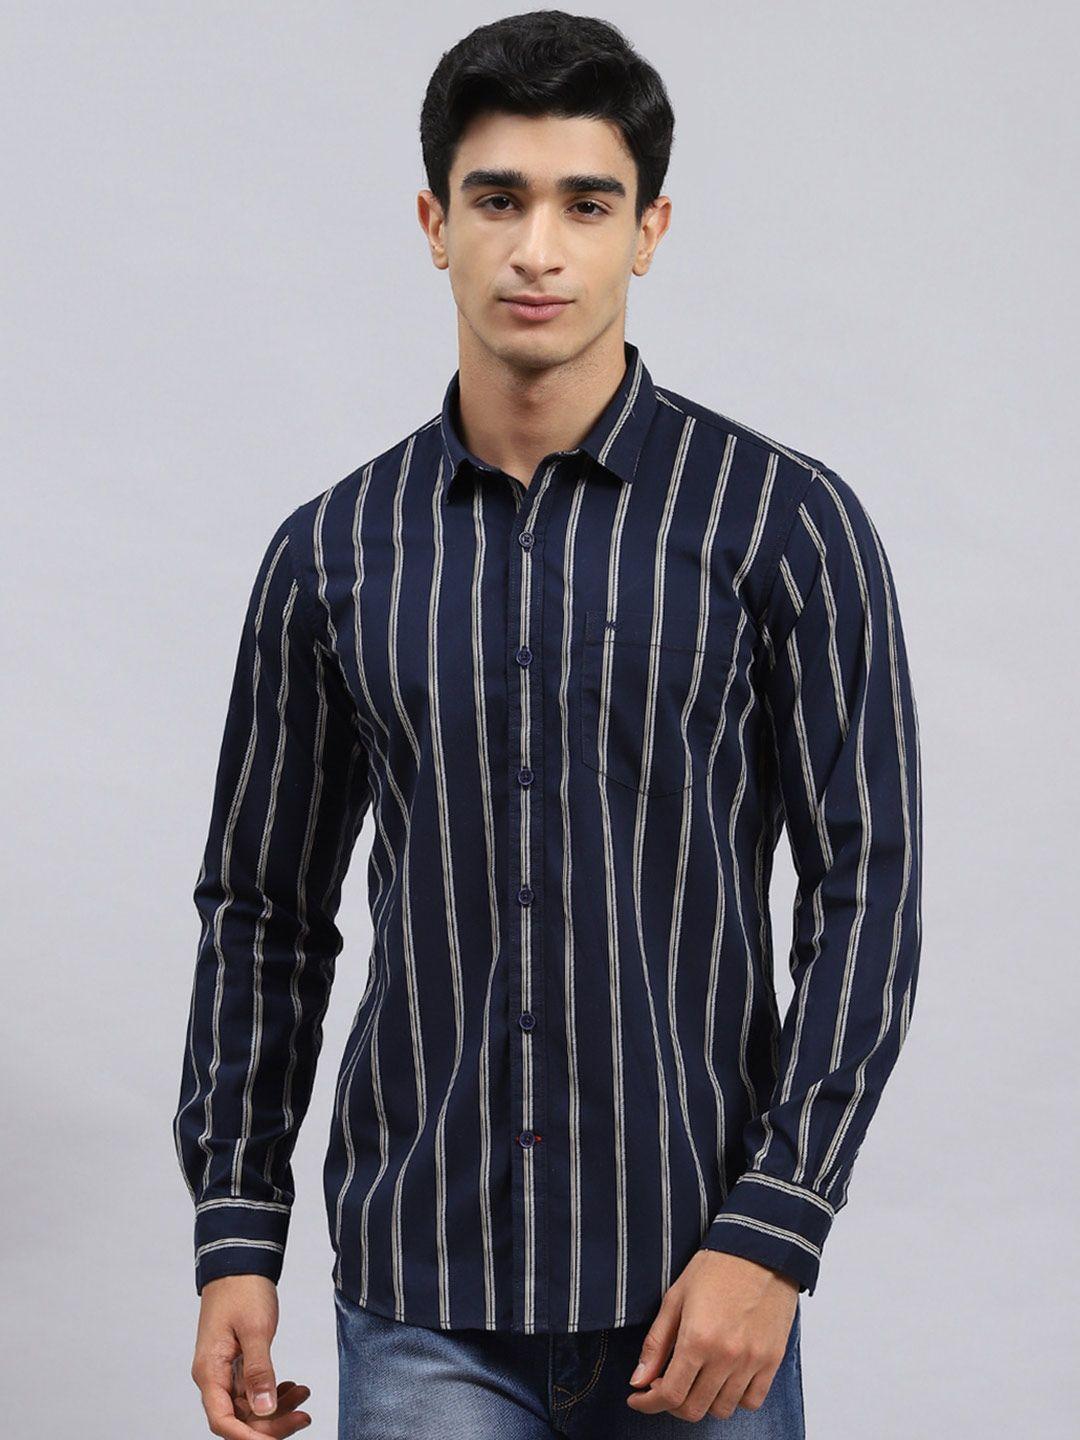 monte carlo classic slim fit vertical stripes pure cotton casual shirt